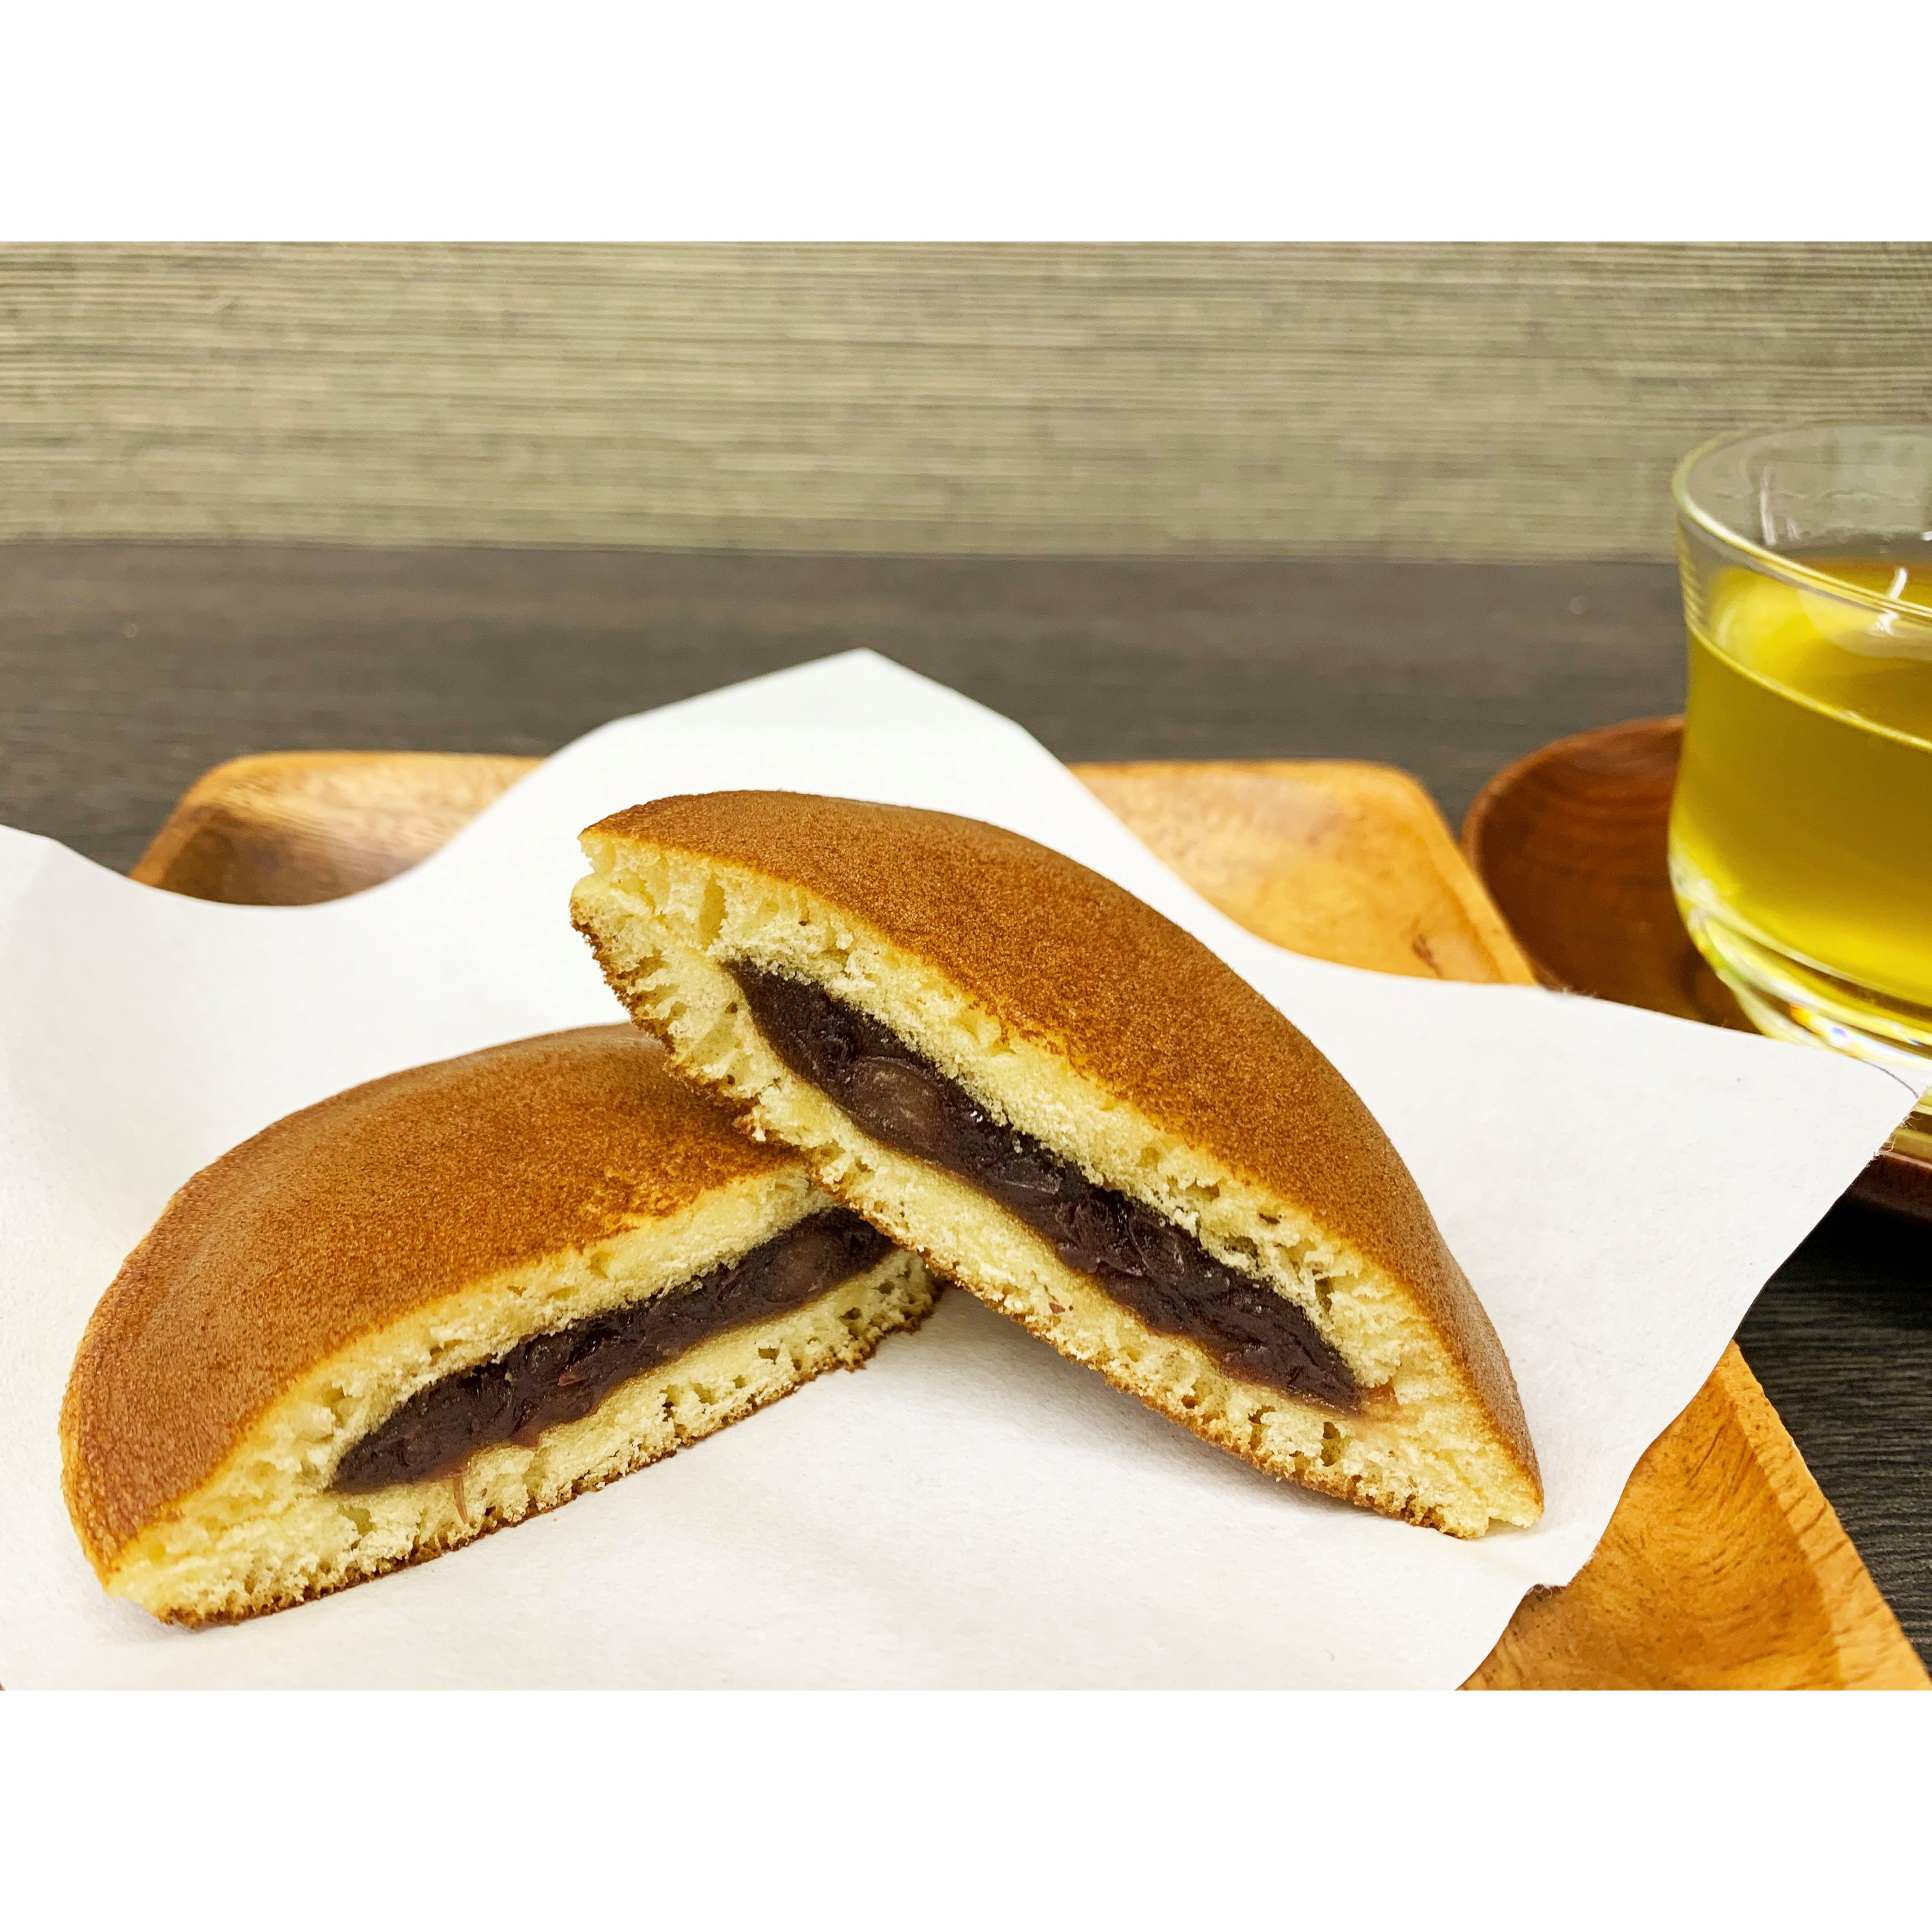 North Colors Organic Dorayaki Additive-Free Azuki Filled Pancakes